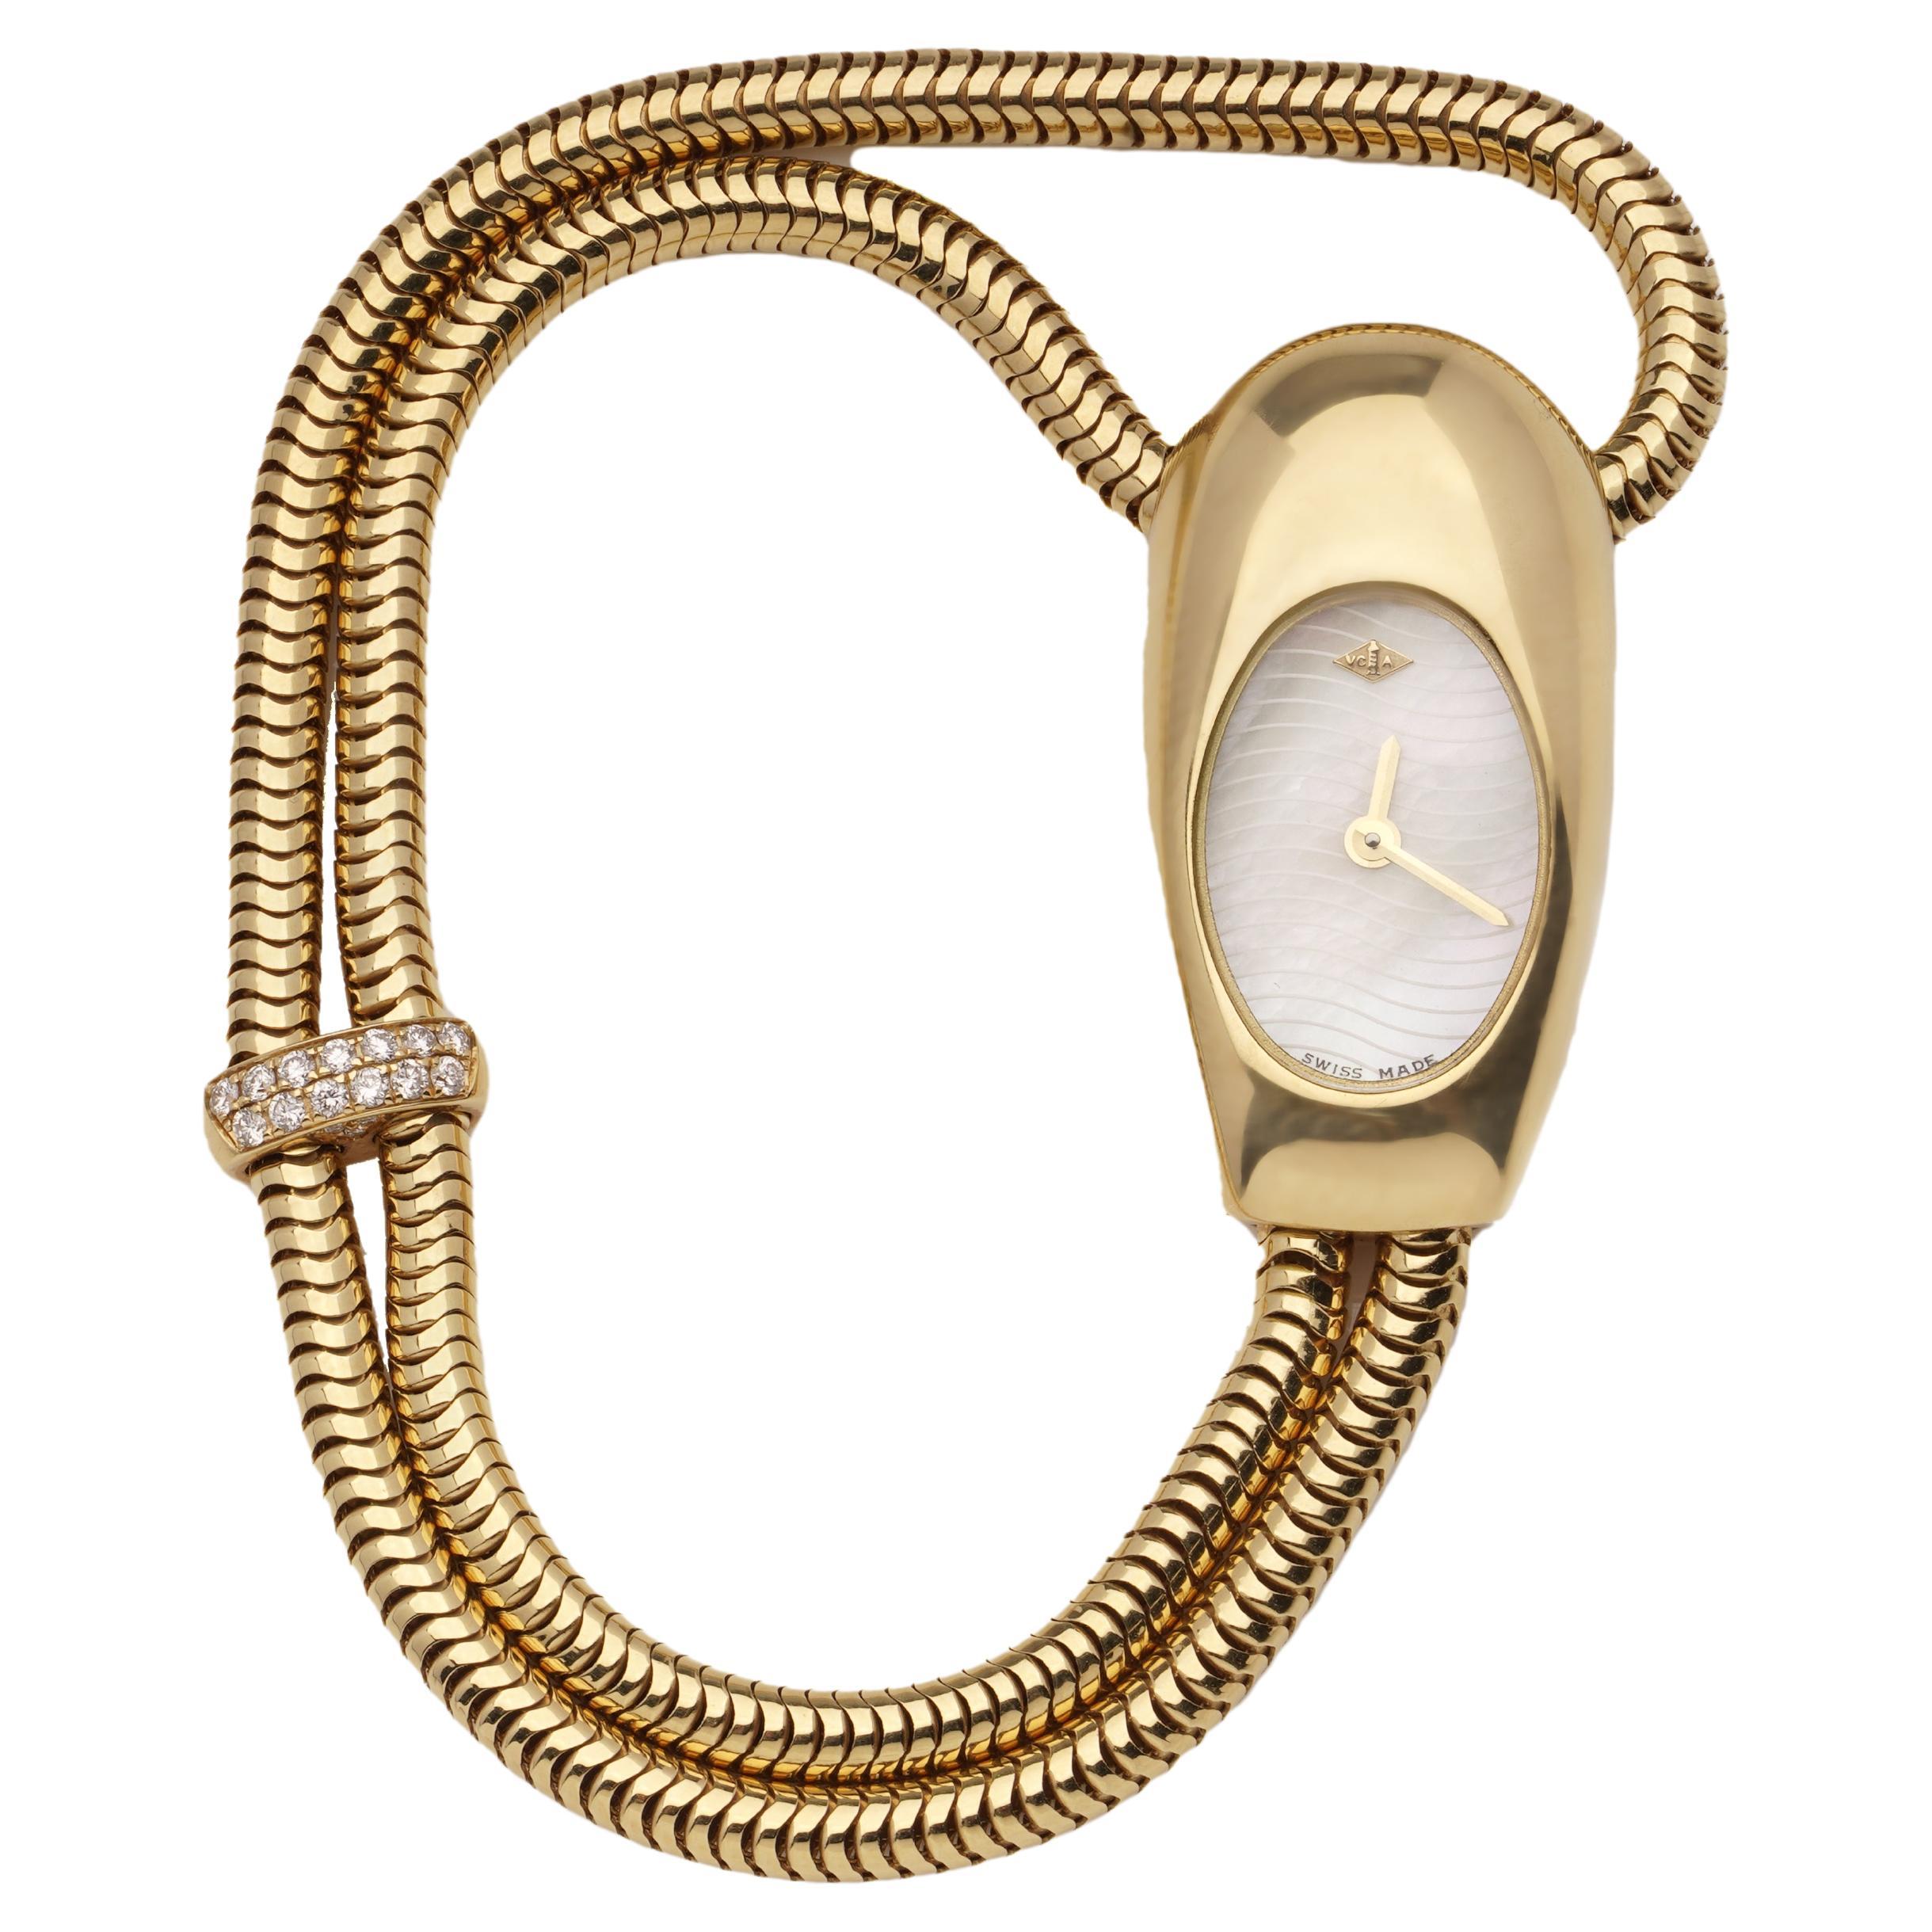 Van Cleef & Arpels Cadenas Serti 18k Yellow Gold Wrist Watch with Diamonds